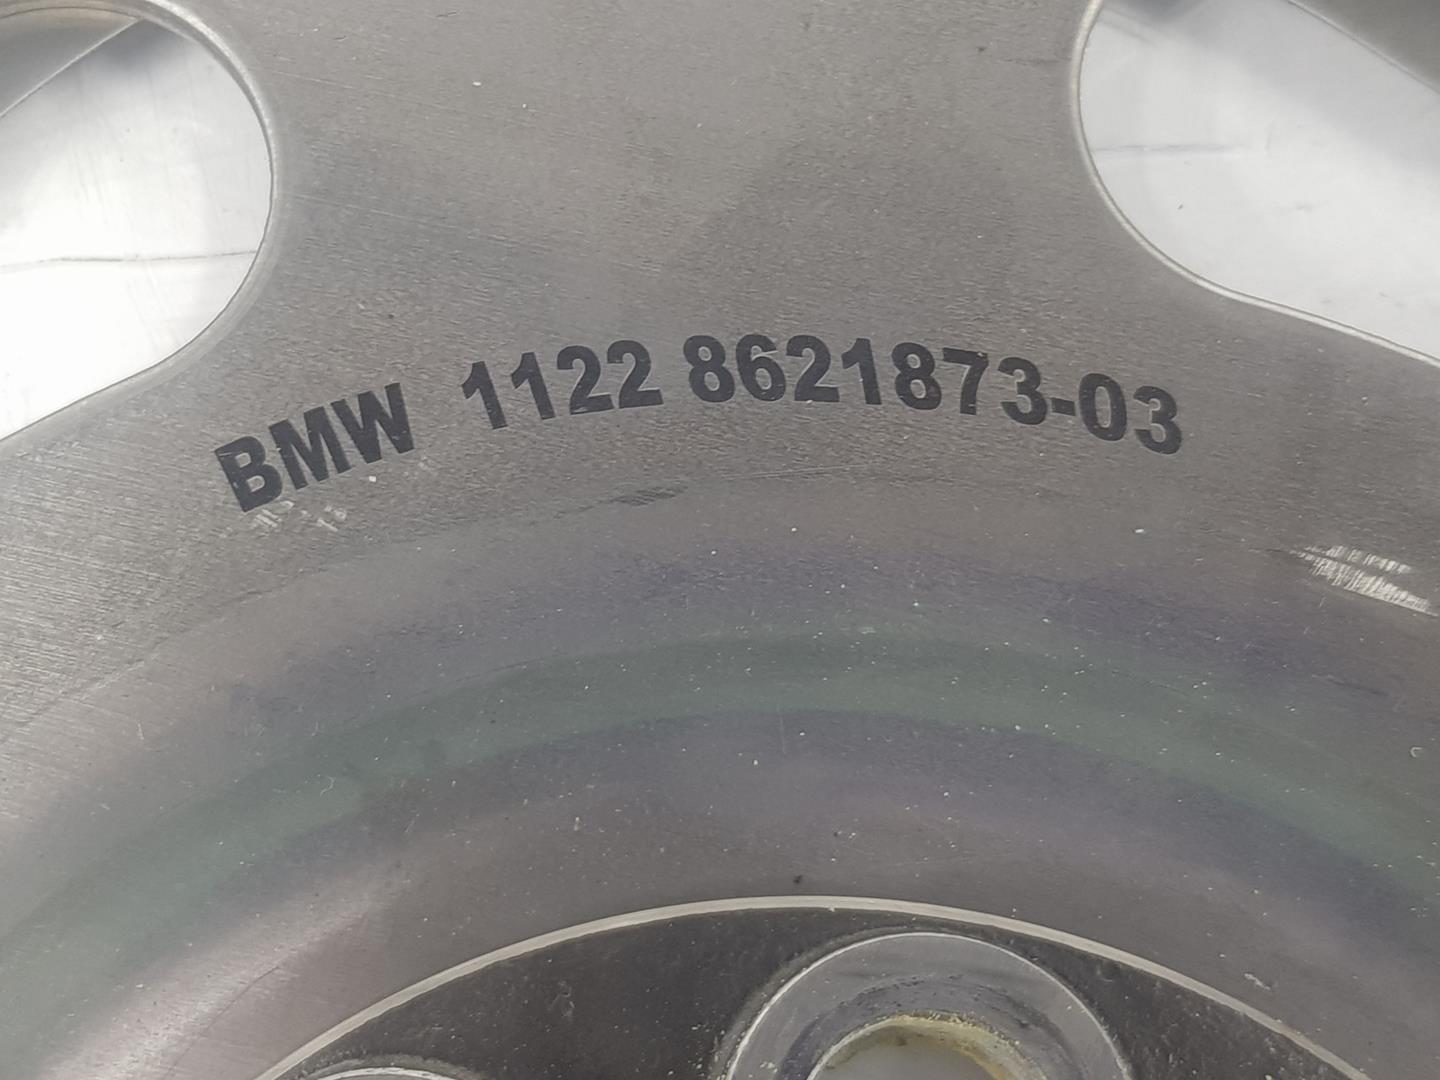 MINI Cooper R56 (2006-2015) Flywheel 11228621873, 8621873, 1212CD2222DL 19829869